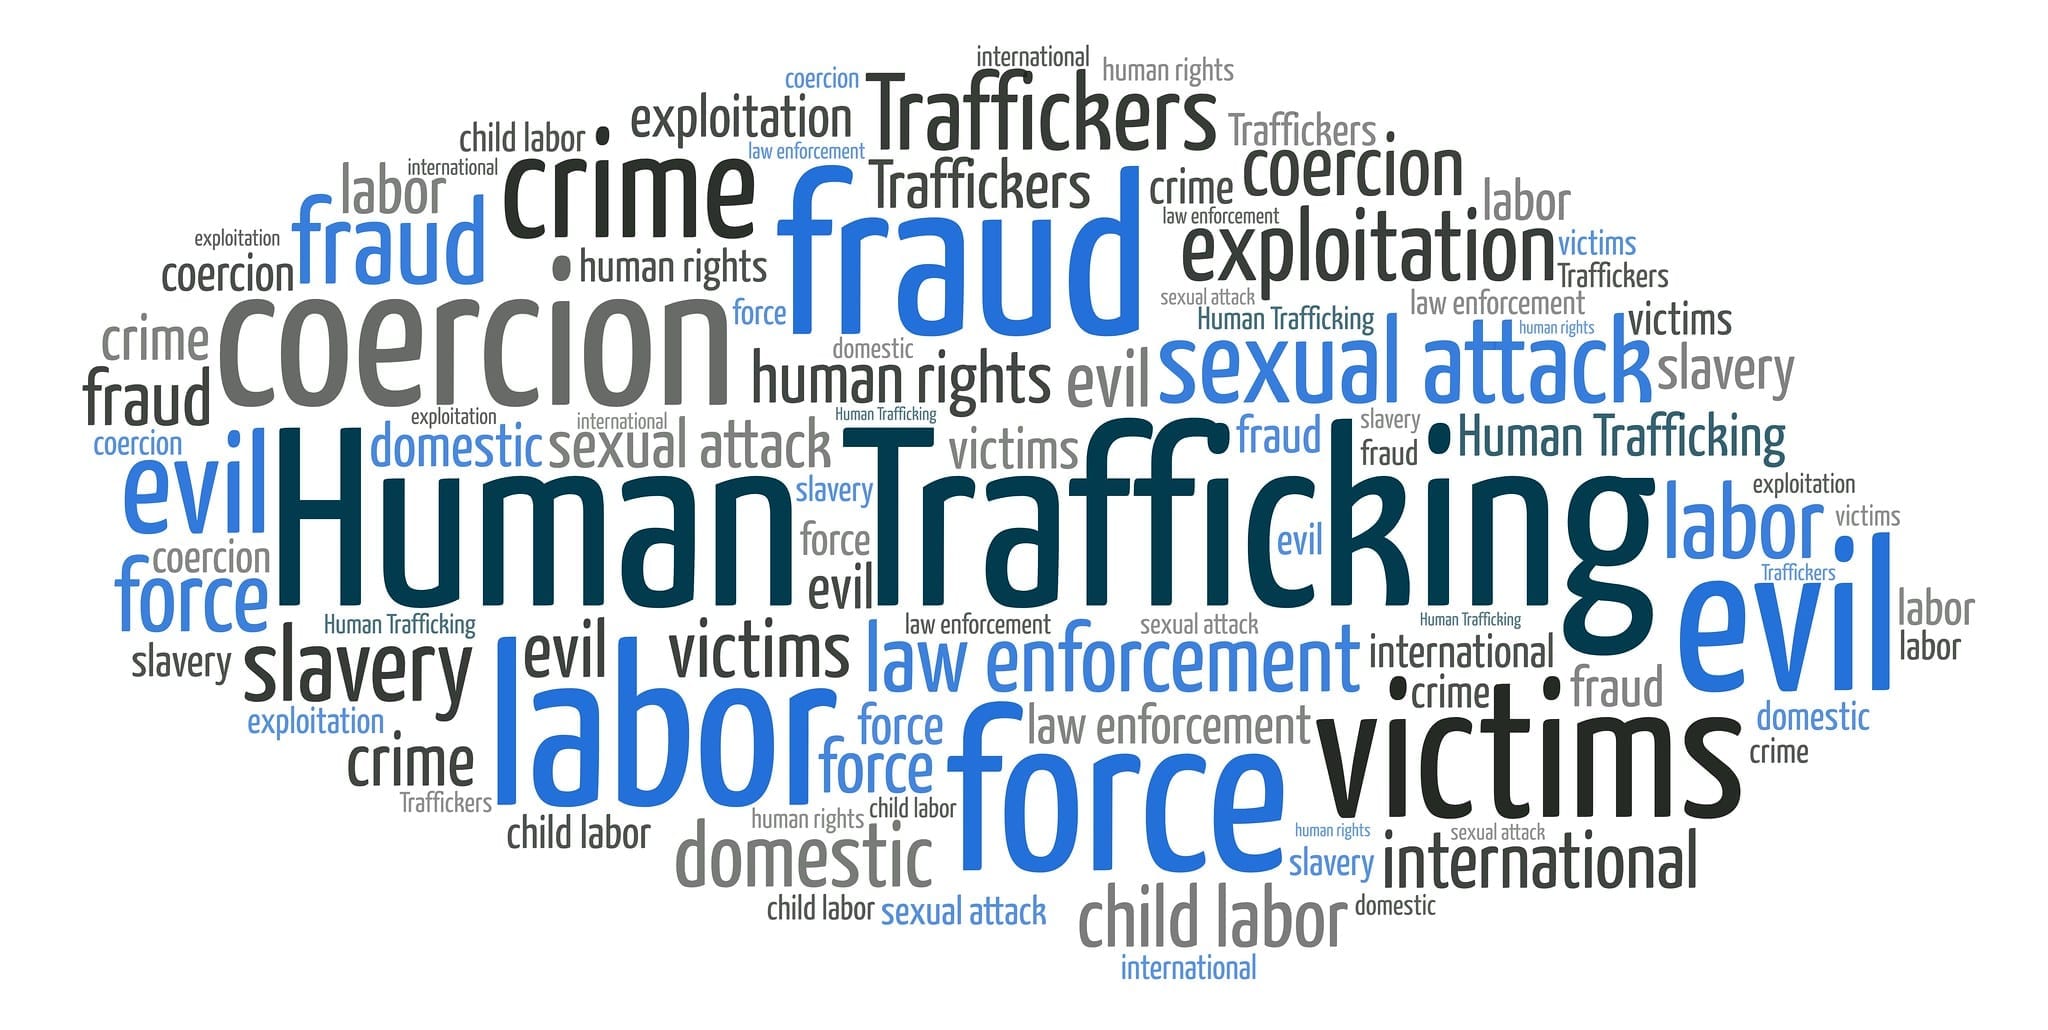 Crisis in Human Trafficking During the Pandemic